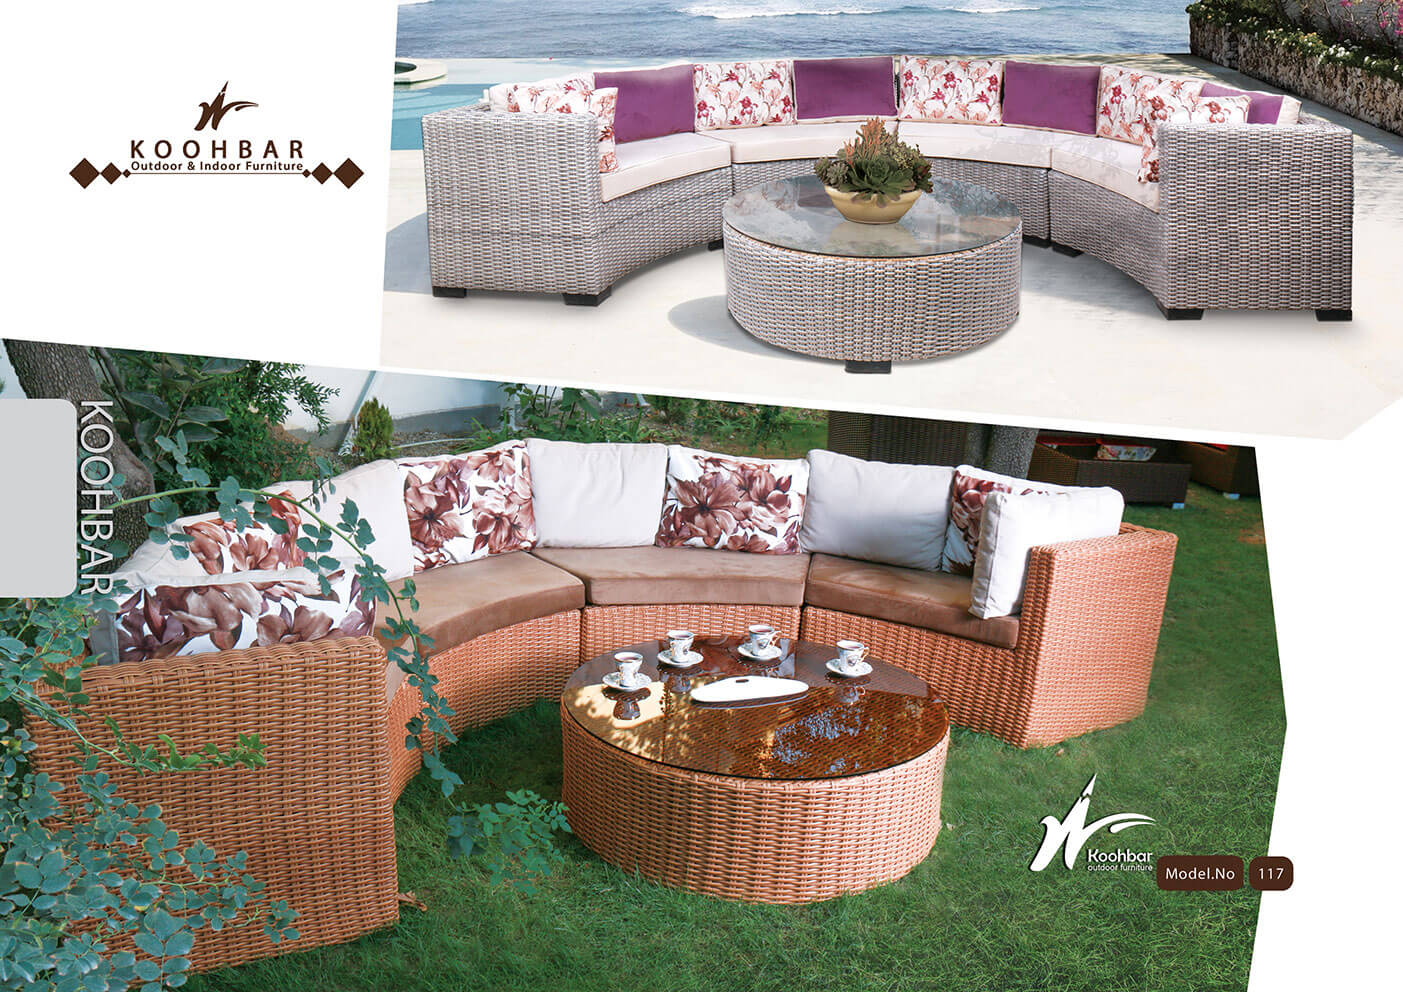 kohbar patio conversation sets 117 model0 - ست میز صندلی حصیری فضای باز کوهبر مدل ۱۱۷ -  - patio-conversation-sets